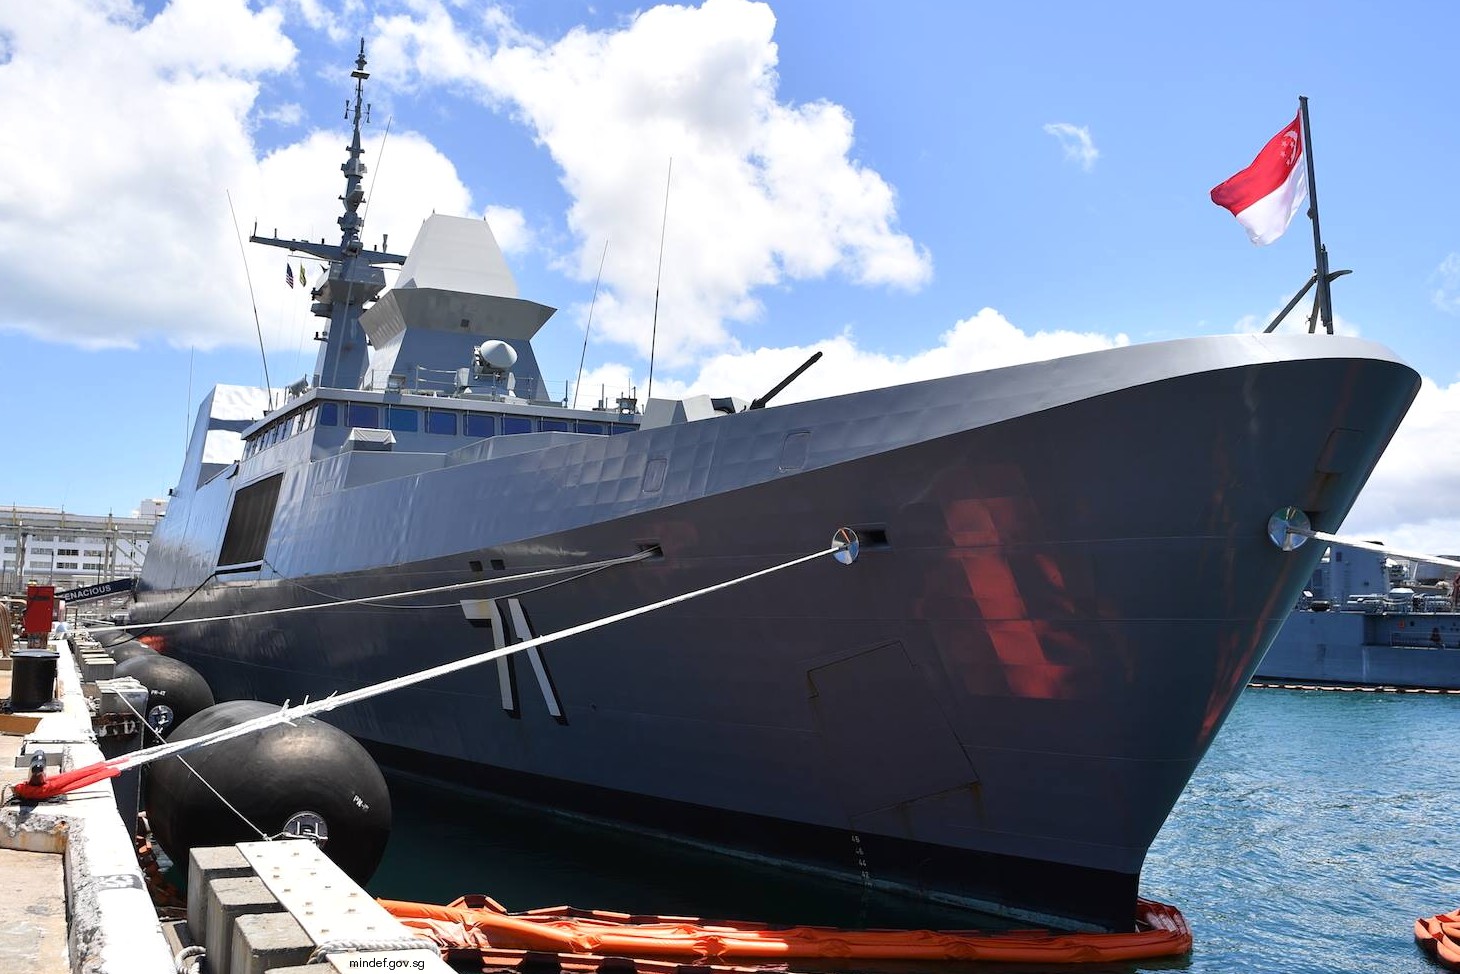 71 rss tenacious formidable class missile frigate ffg republic singapore navy 16x